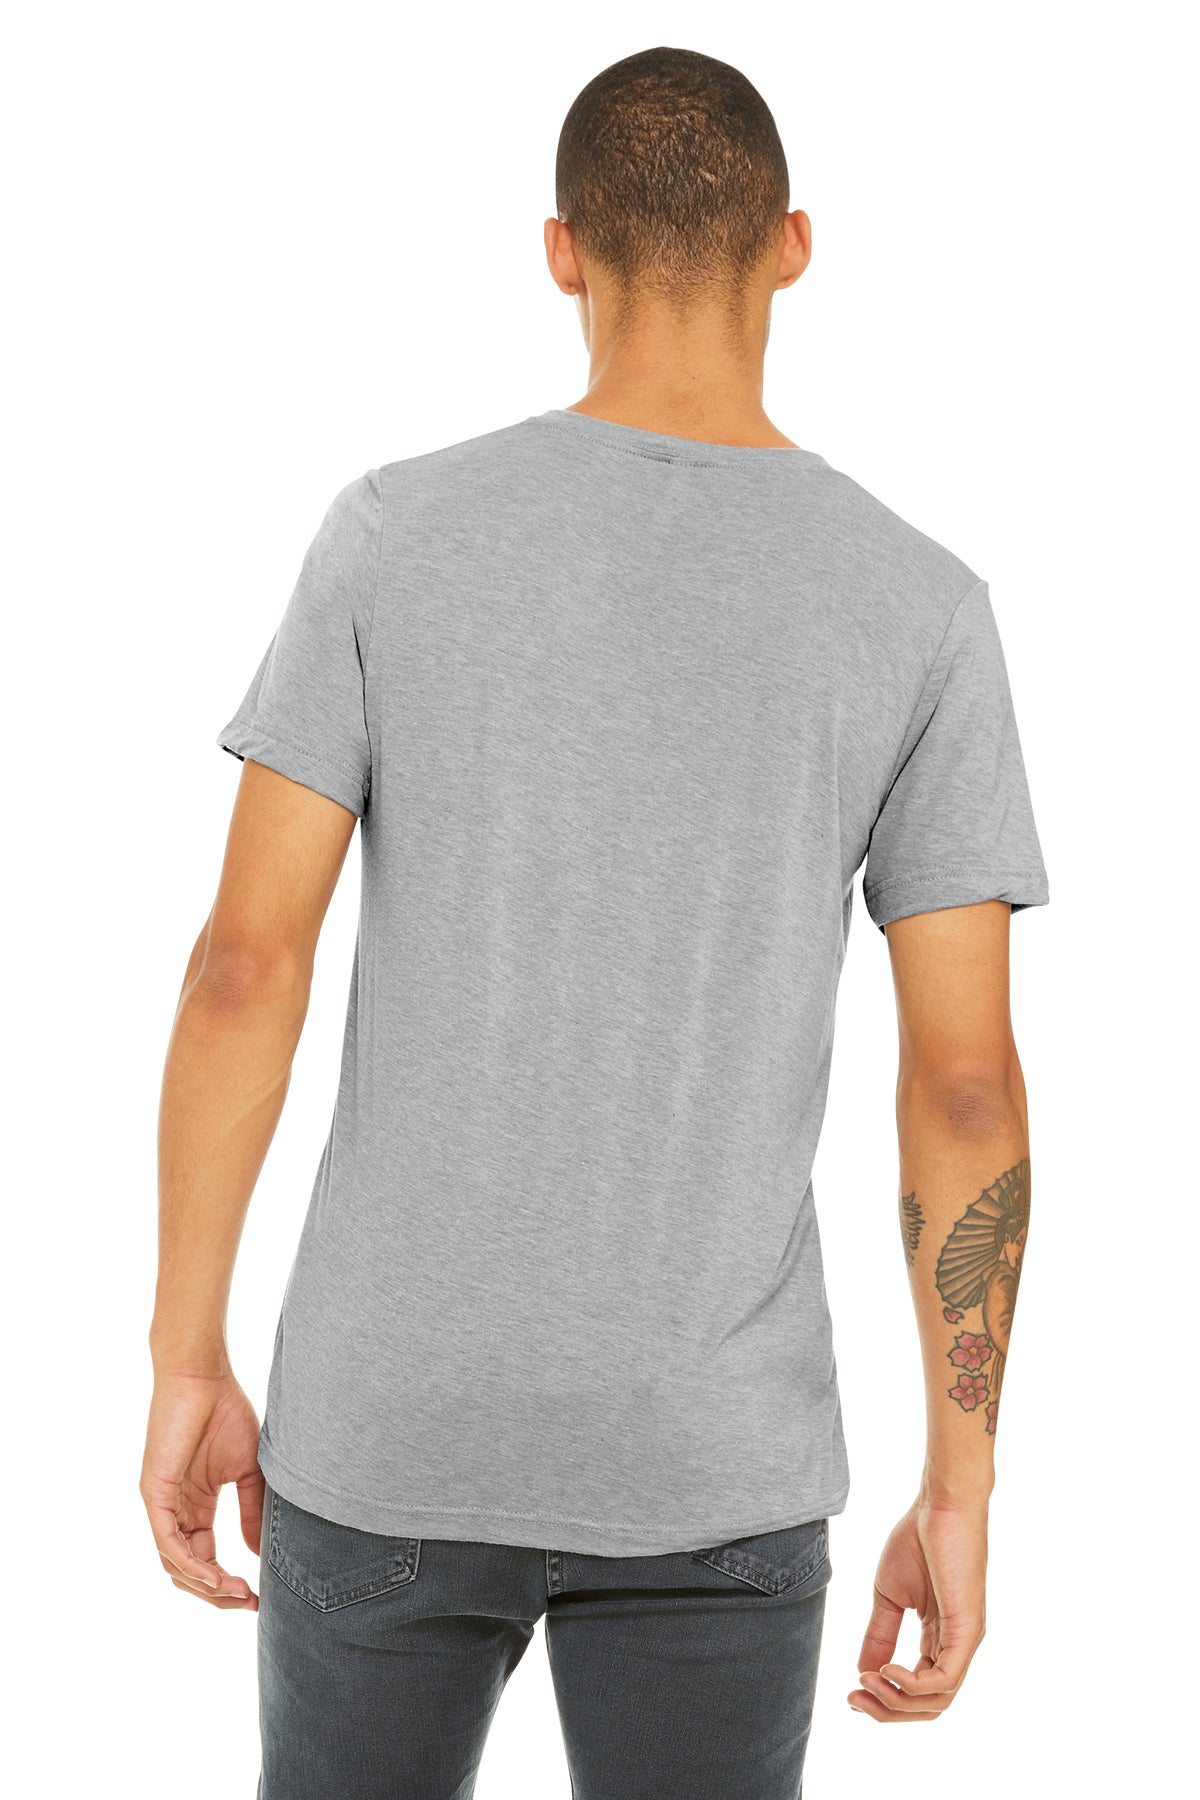 bella + canvas unisex triblend short sleeve v-neck t-shirt 3415c ath grey trbln